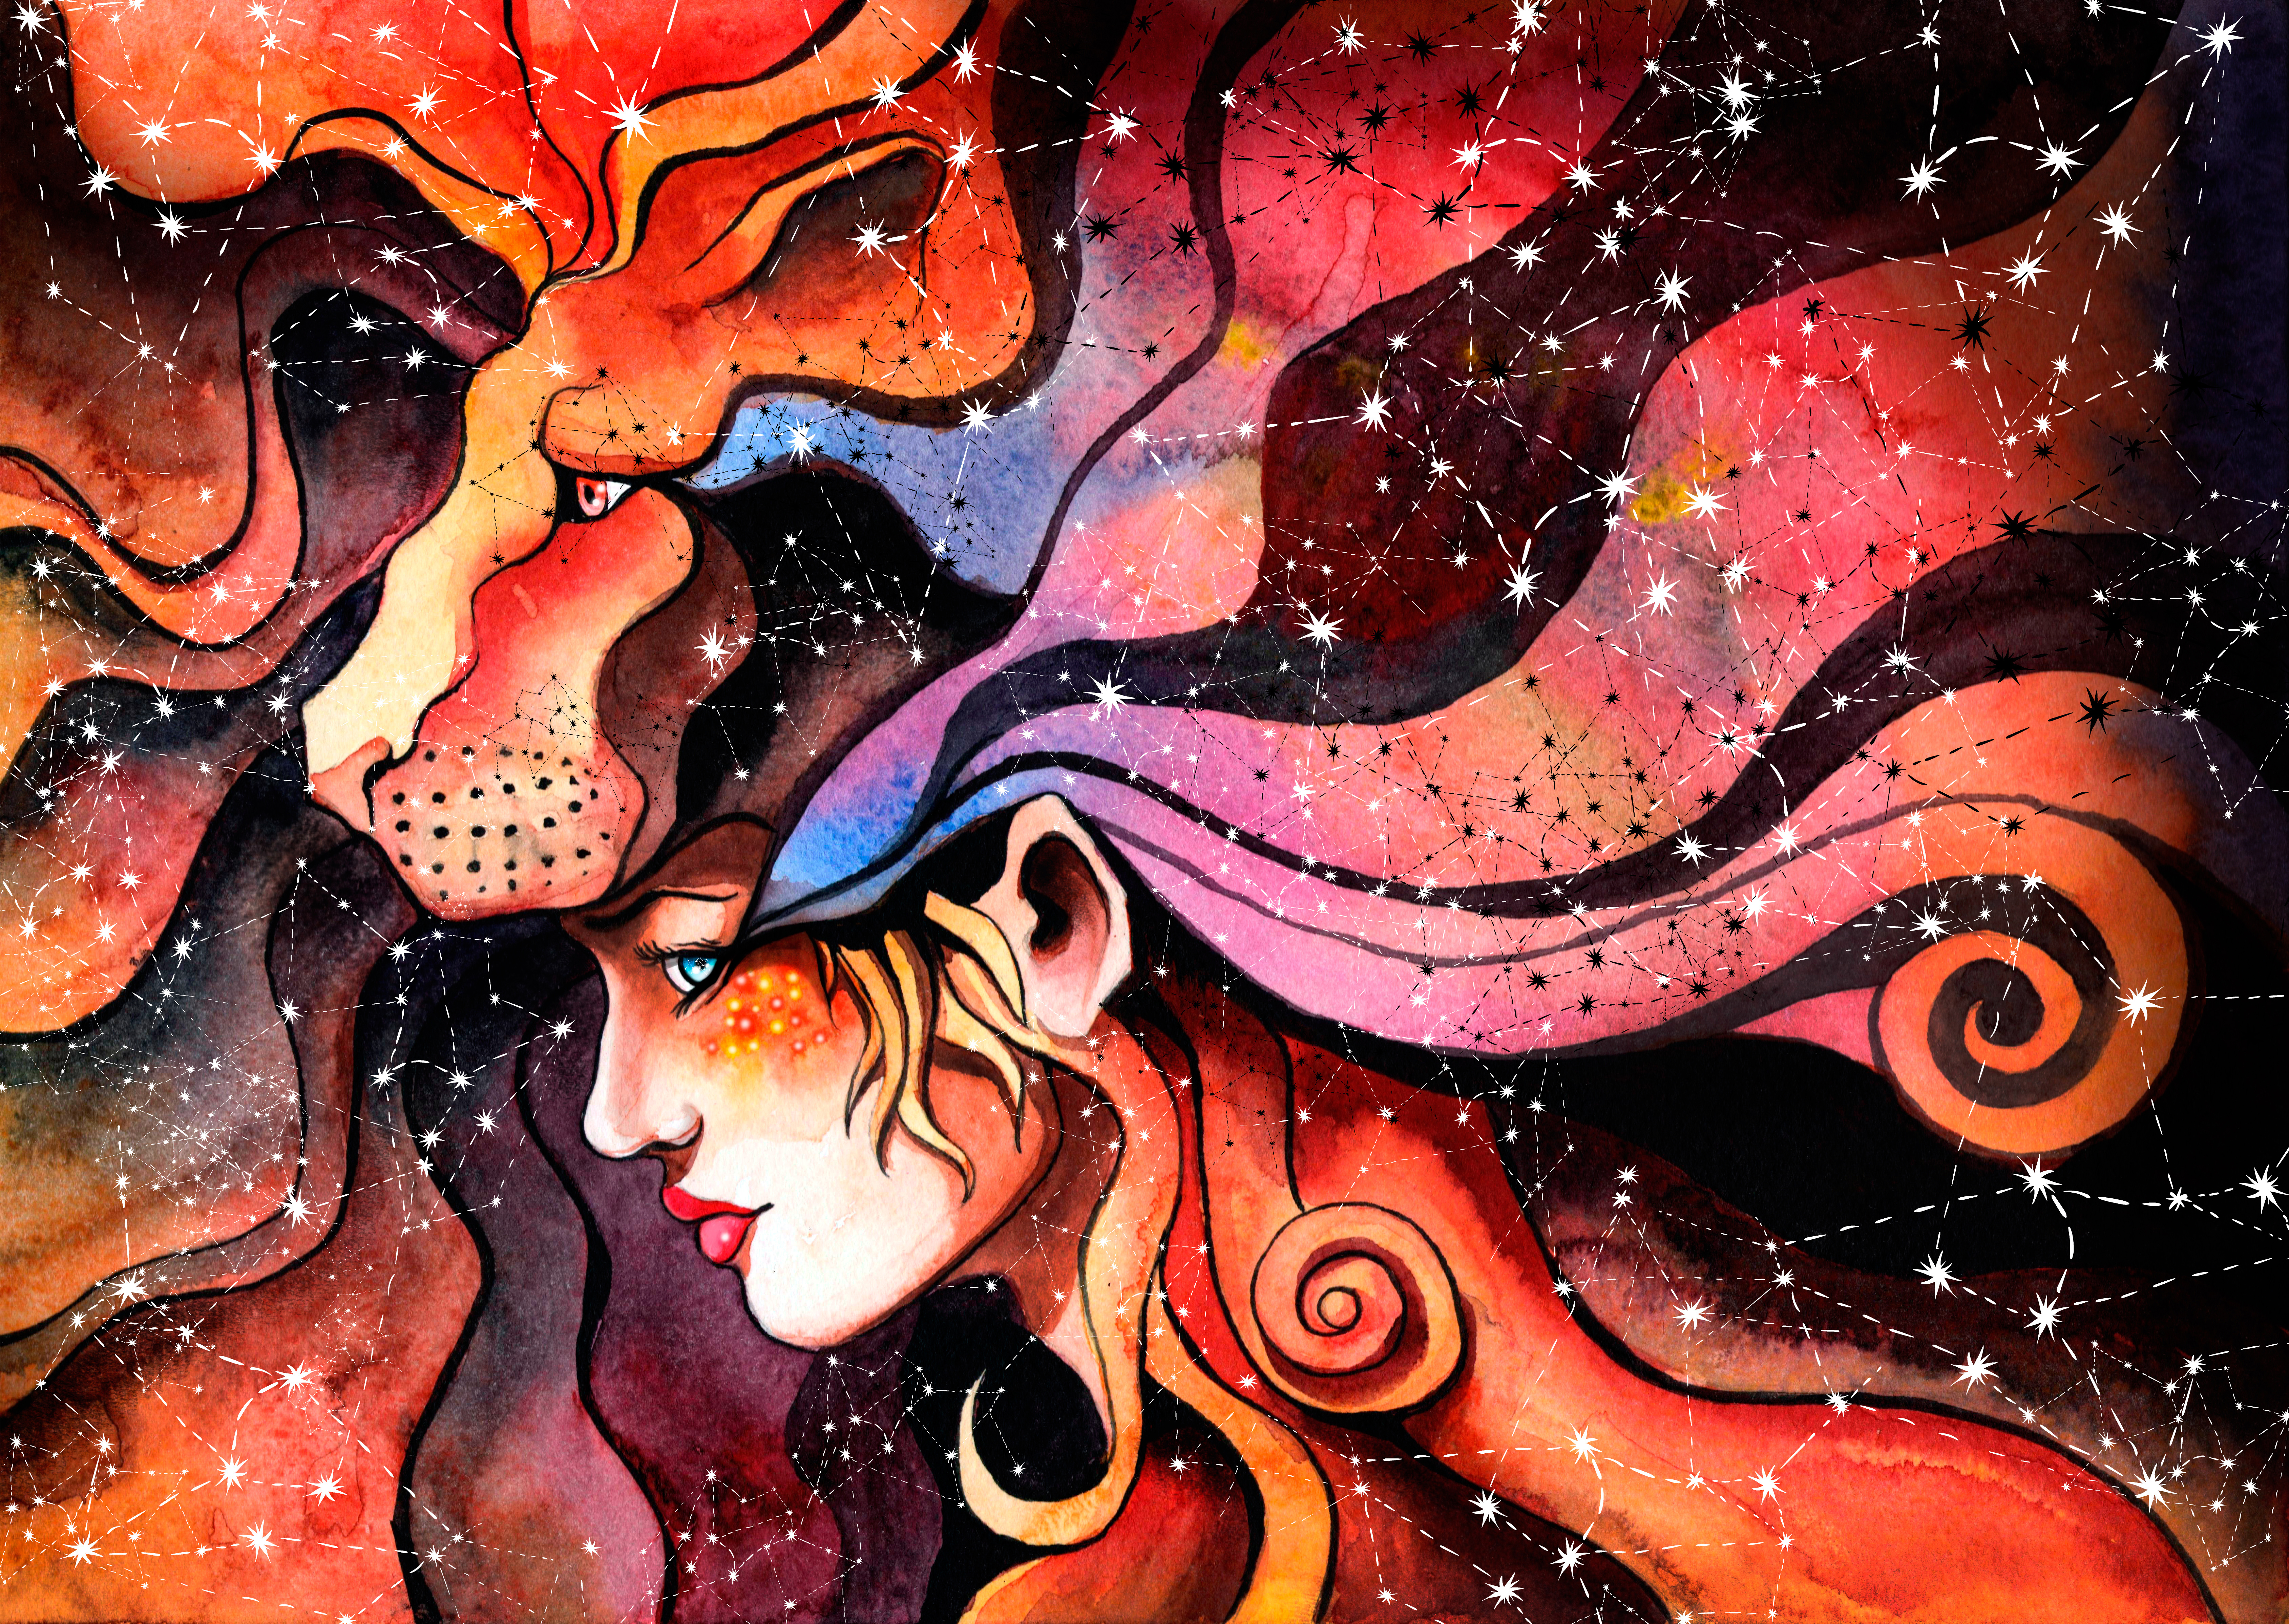 A colorful illustration representing the Leo zodiac sign | Source: Shutterstock